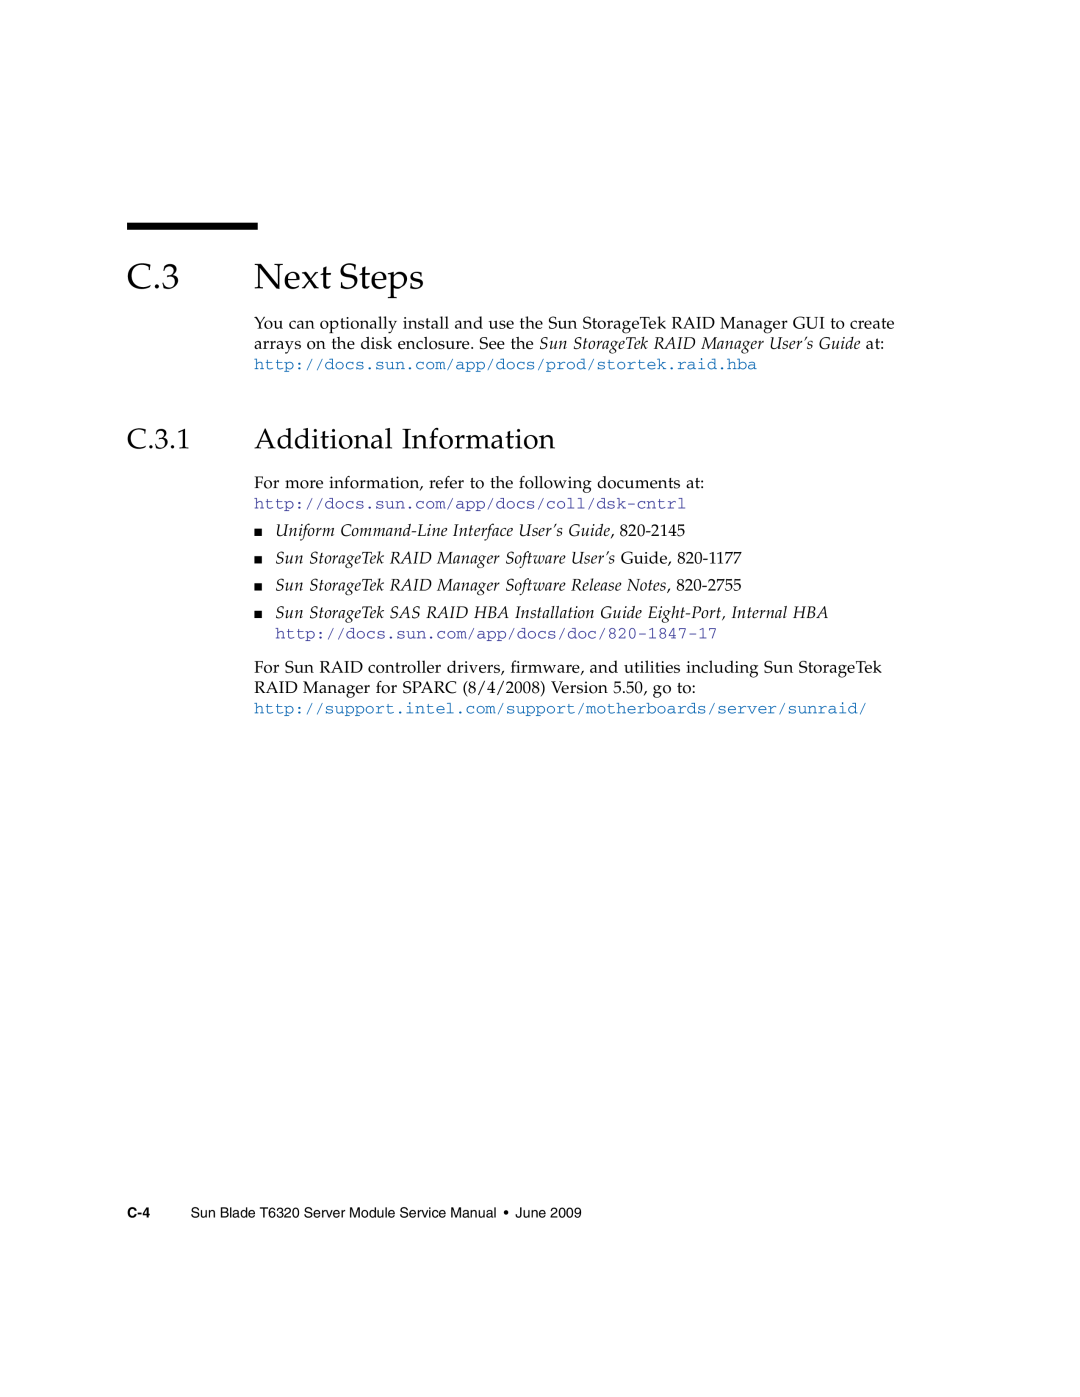 Sun Microsystems T6320 C.3 Next Steps, C.3.1 Additional Information, http//docs.sun.com/app/docs/prod/stortek.raid.hba 